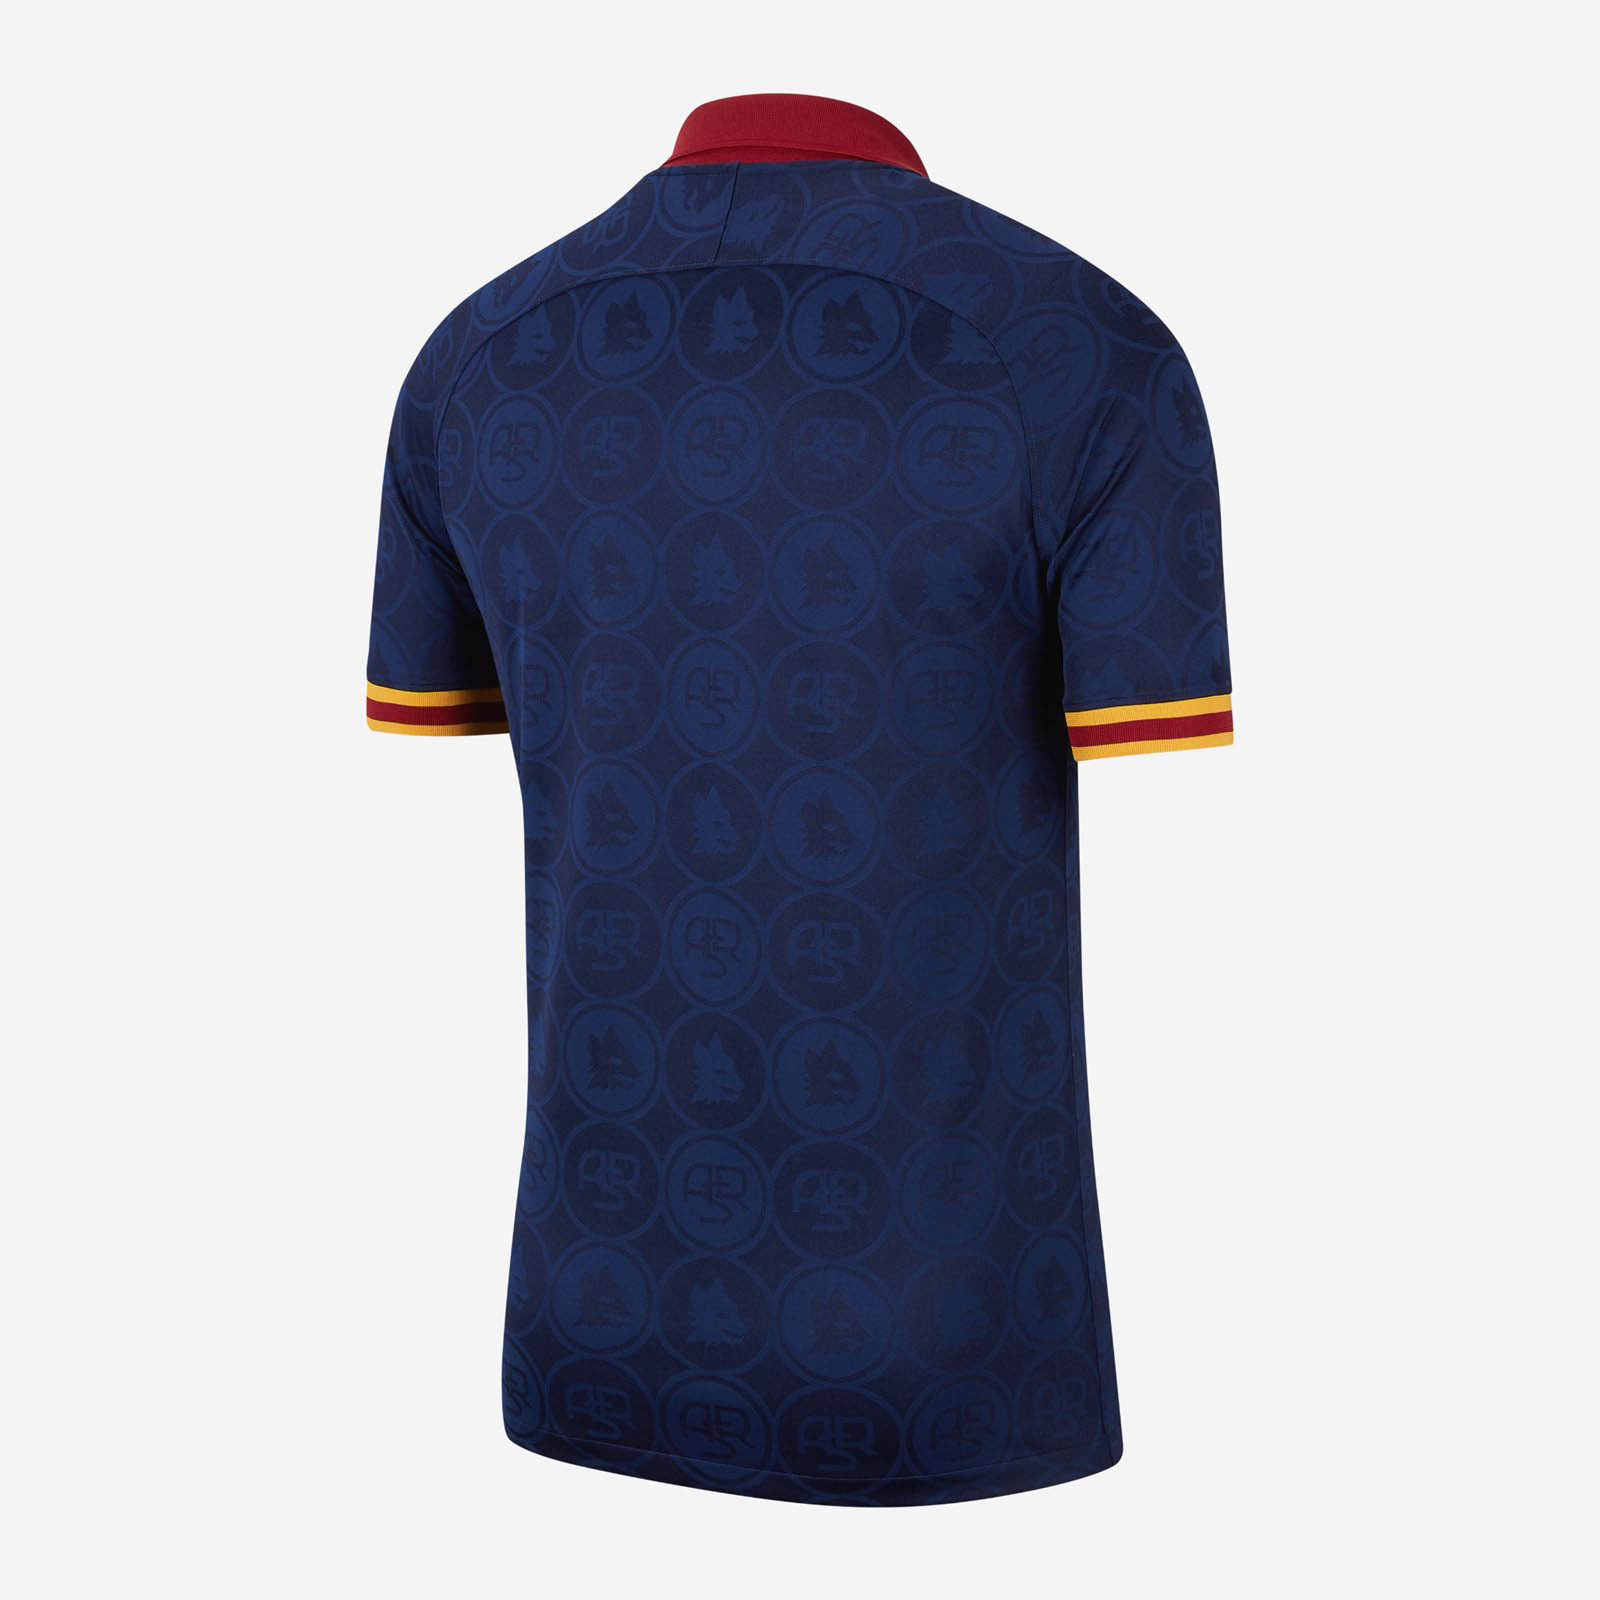 AS Roma 2019-20 Third Navy Soccer Jersey Shirt - Click Image to Close